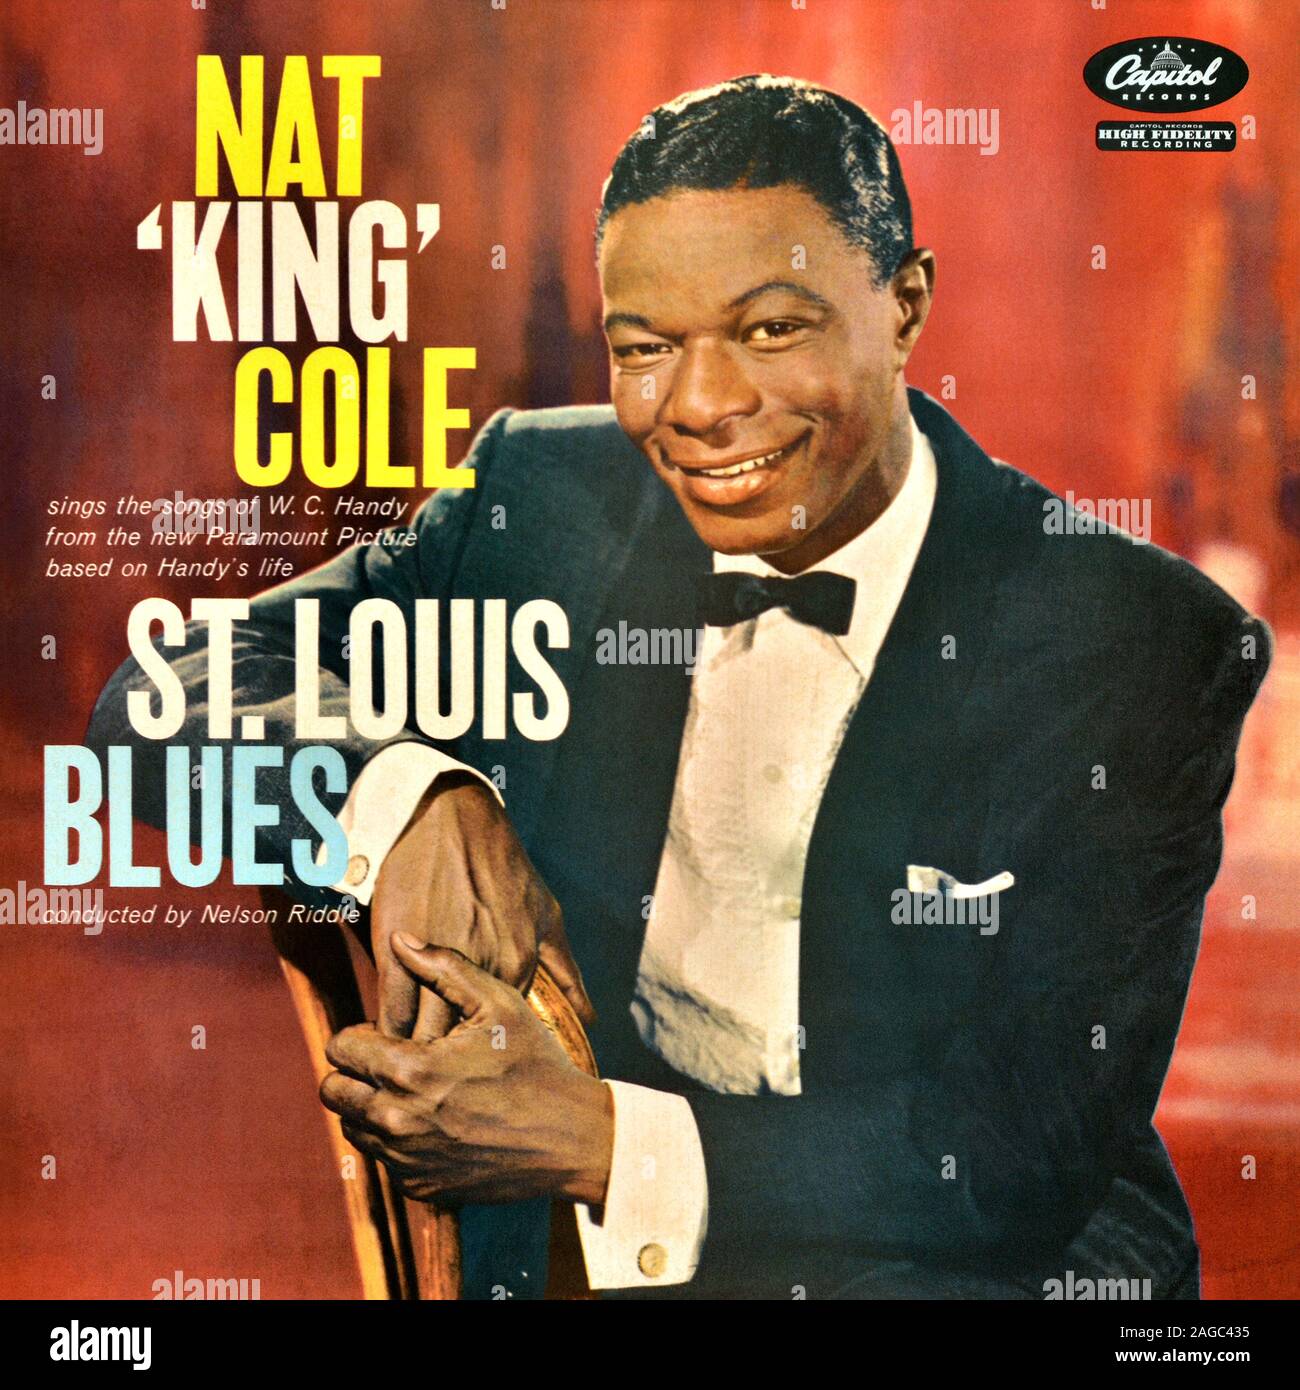 NAT King Cole - original Vinyl Album Cover - St. Louis Blues - 1958 Stockfoto